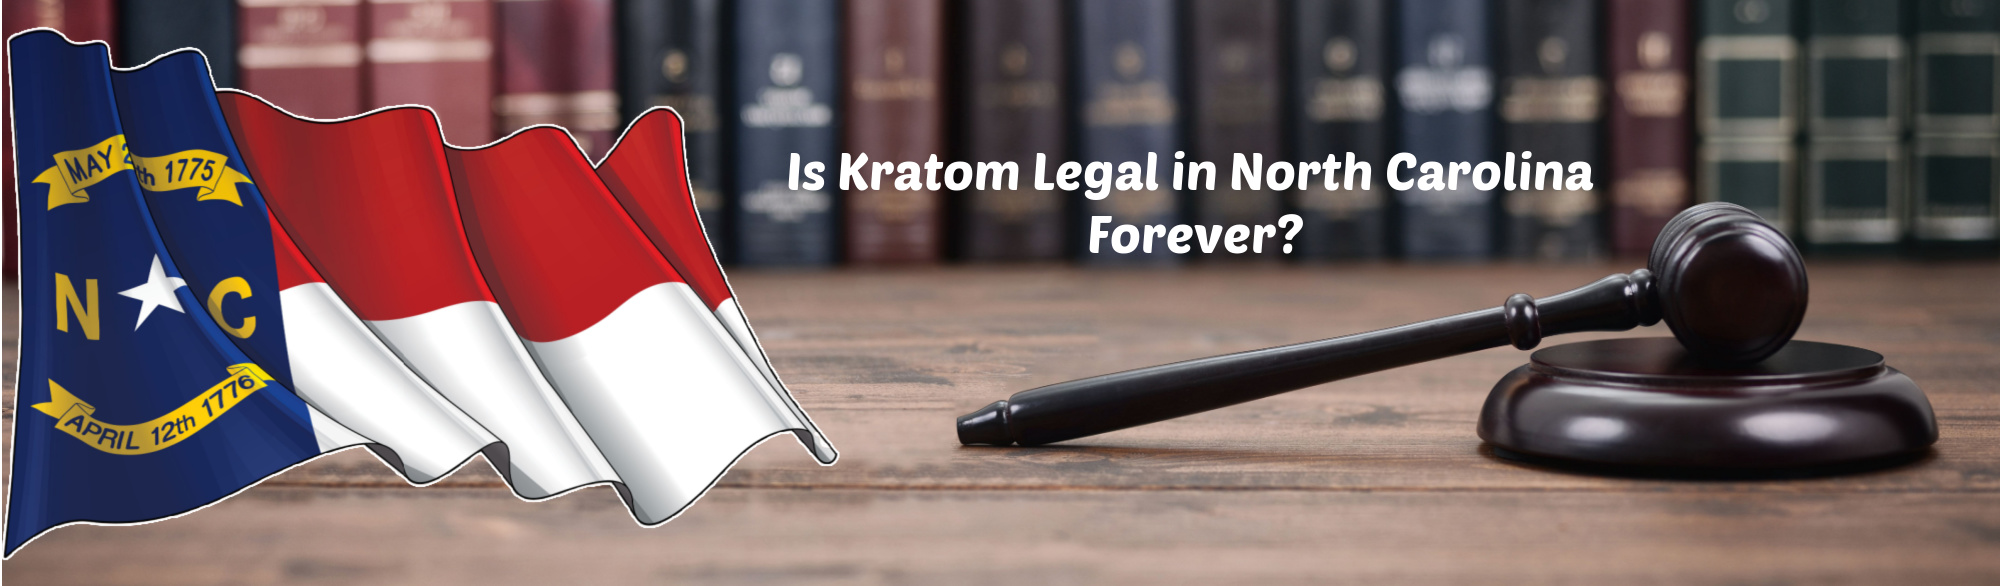 image of is kratom legal in north carolina forever